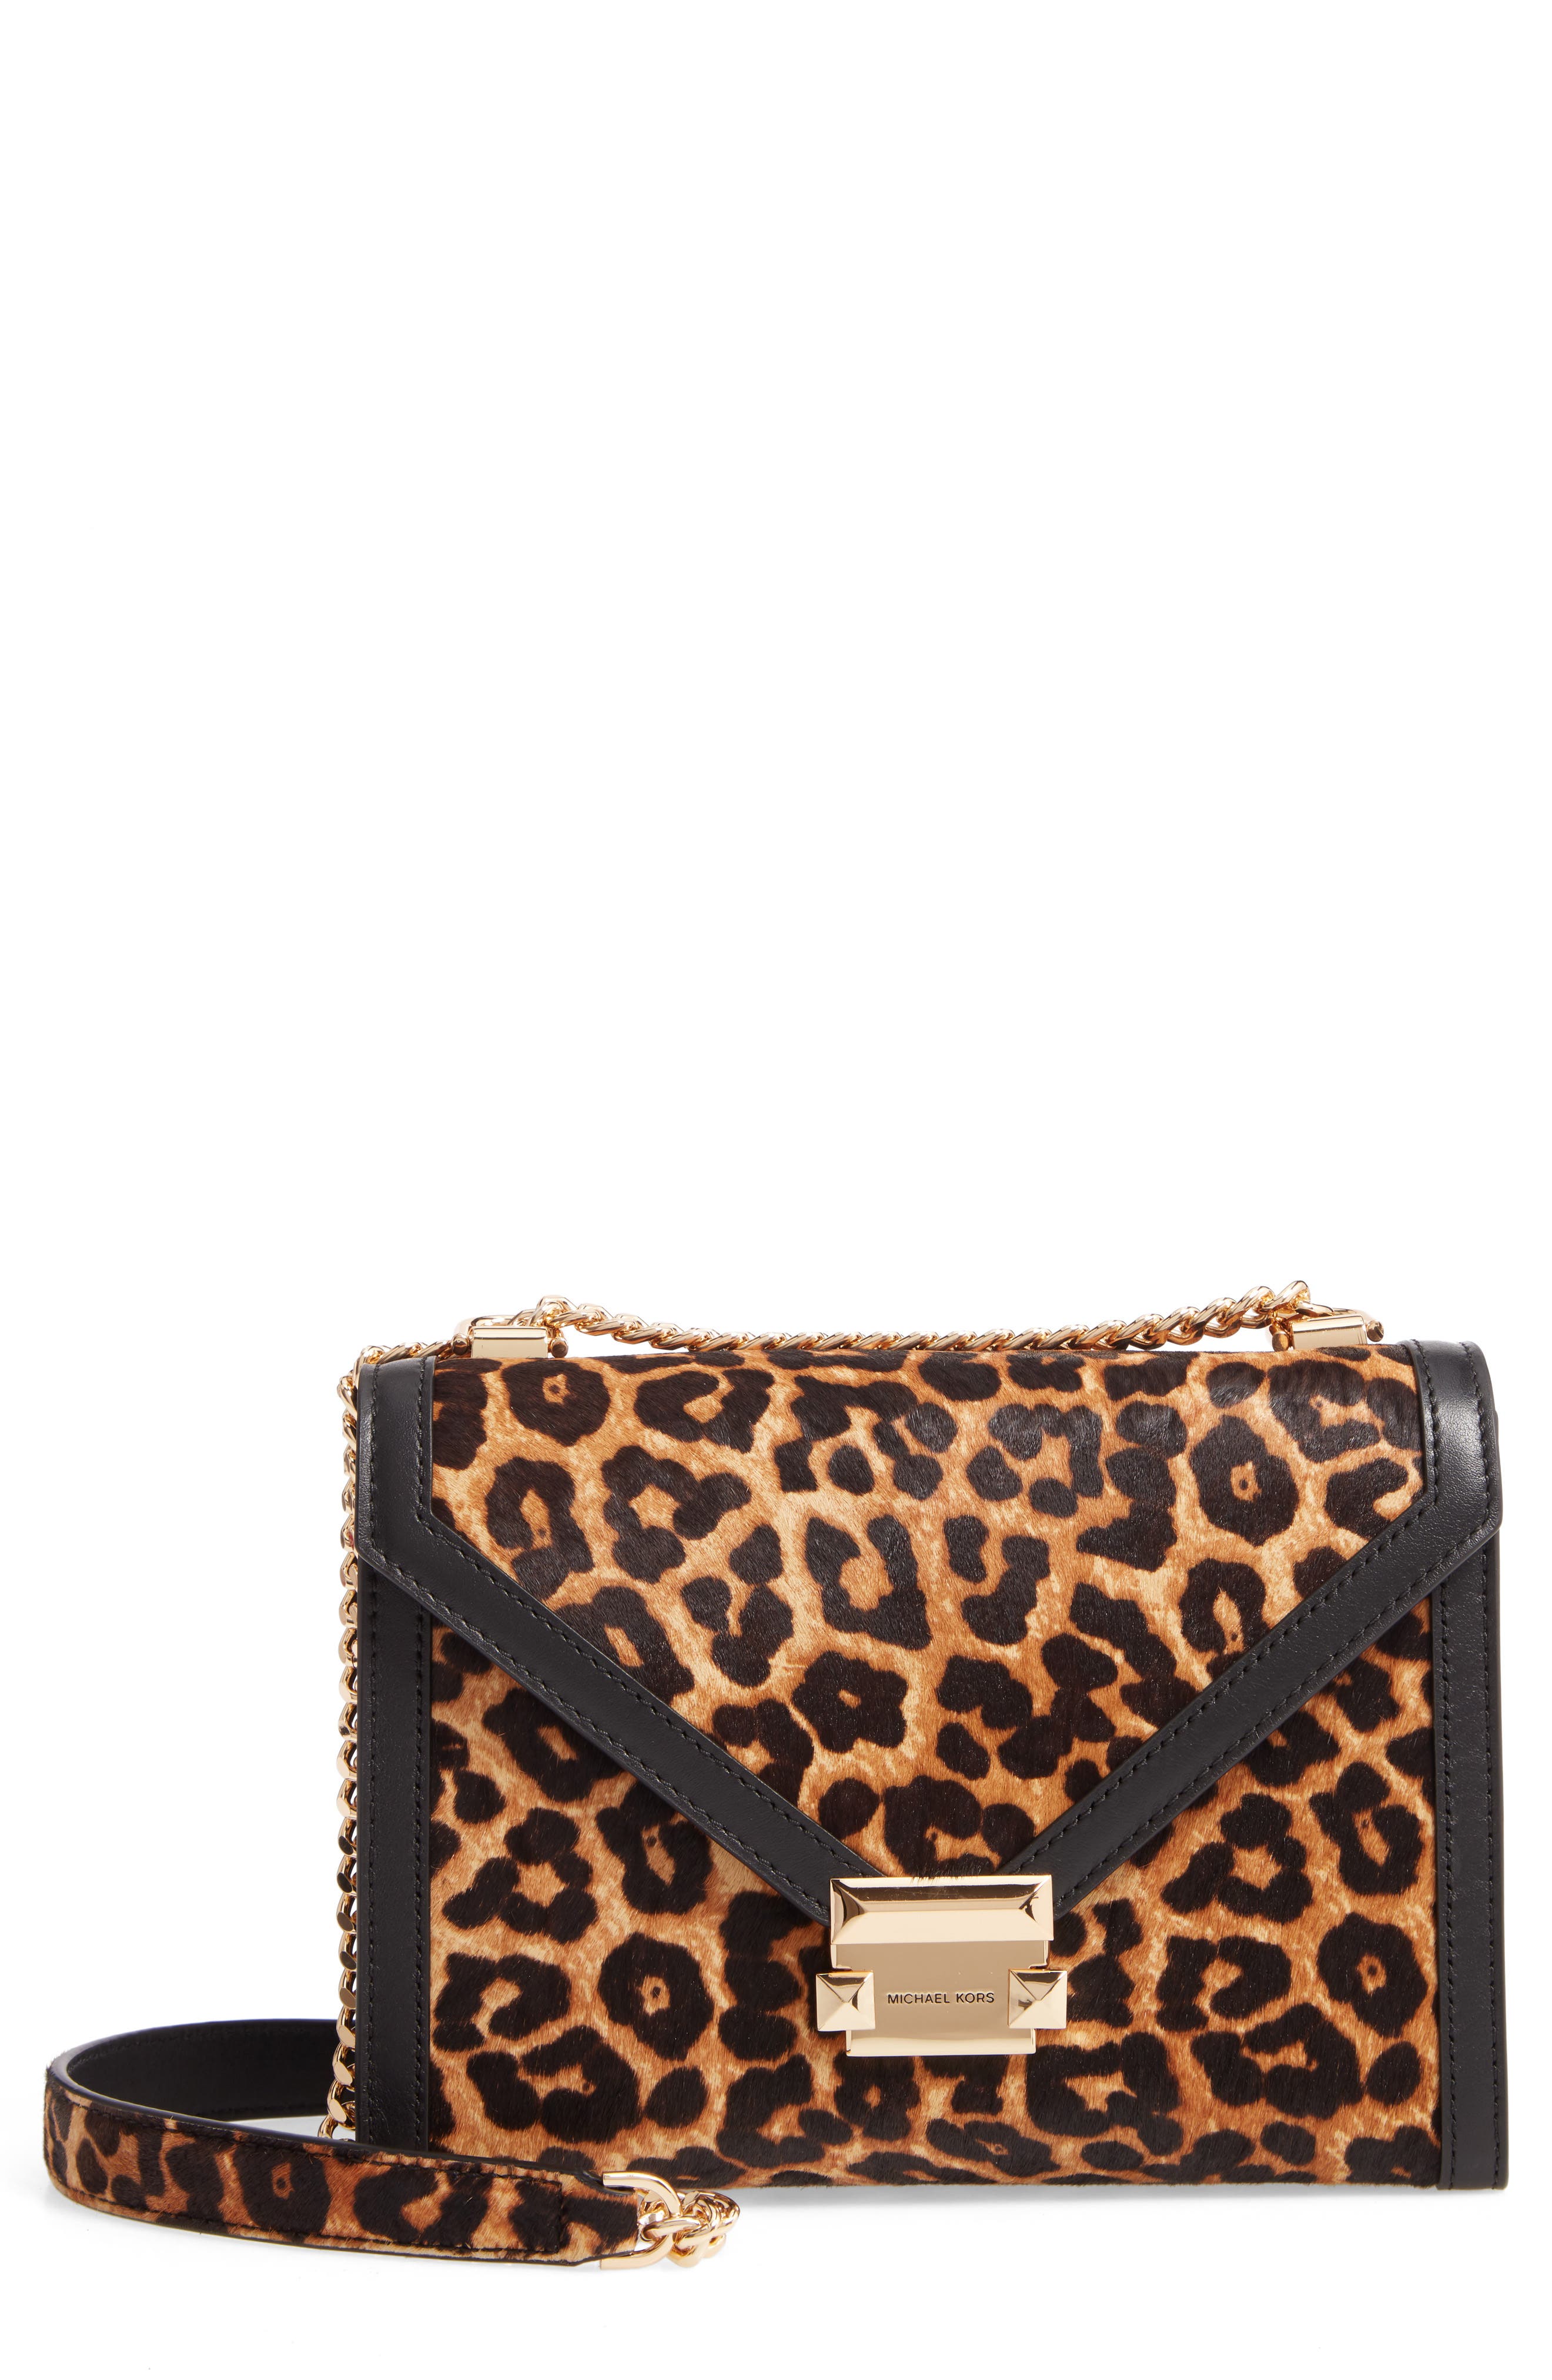 michael kors leopard print purse